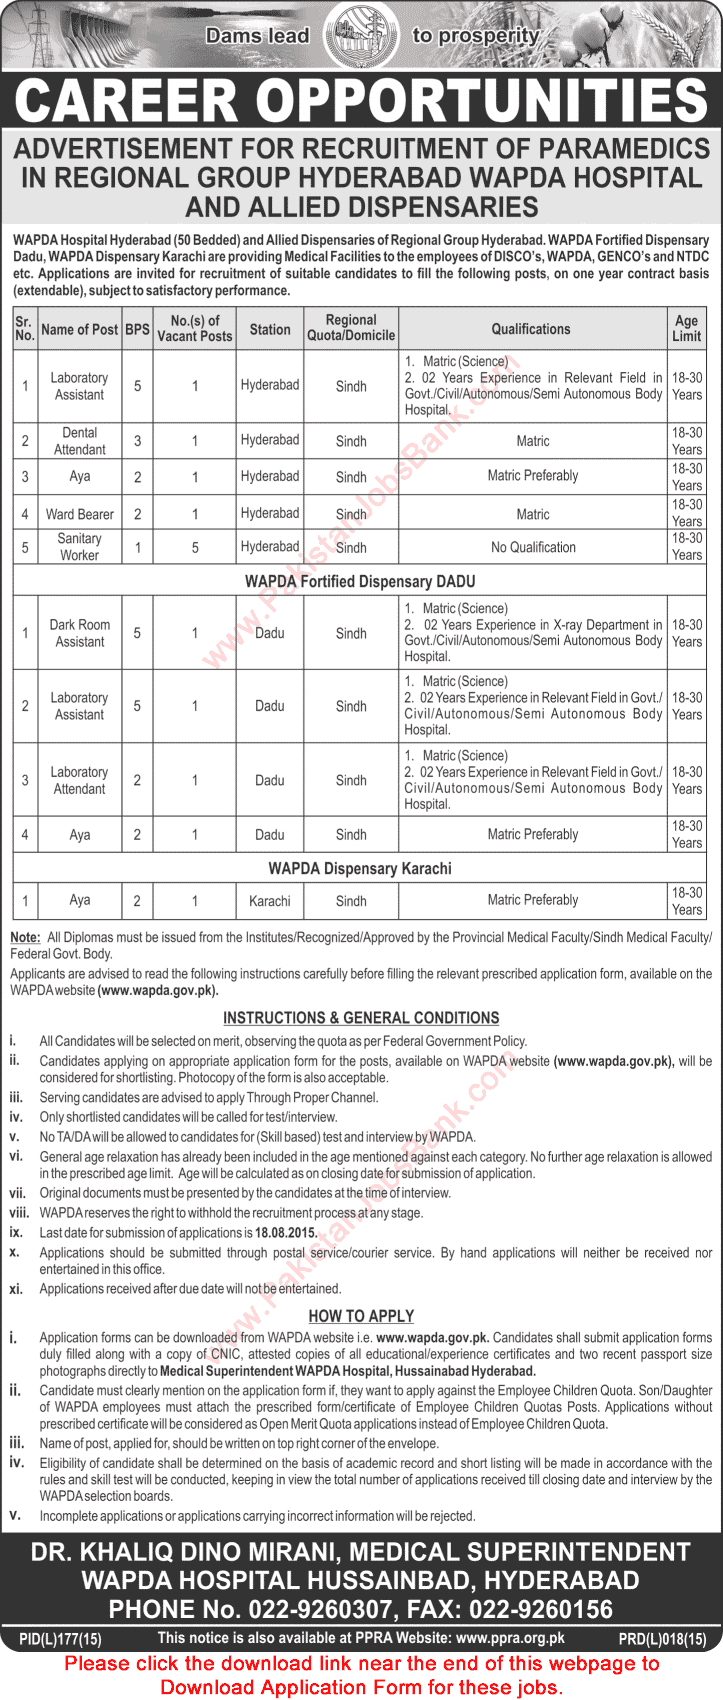 WAPDA Hospital & Dispensaries Hyderabad / Dadu / Karachi Jobs 2015 July Application Form